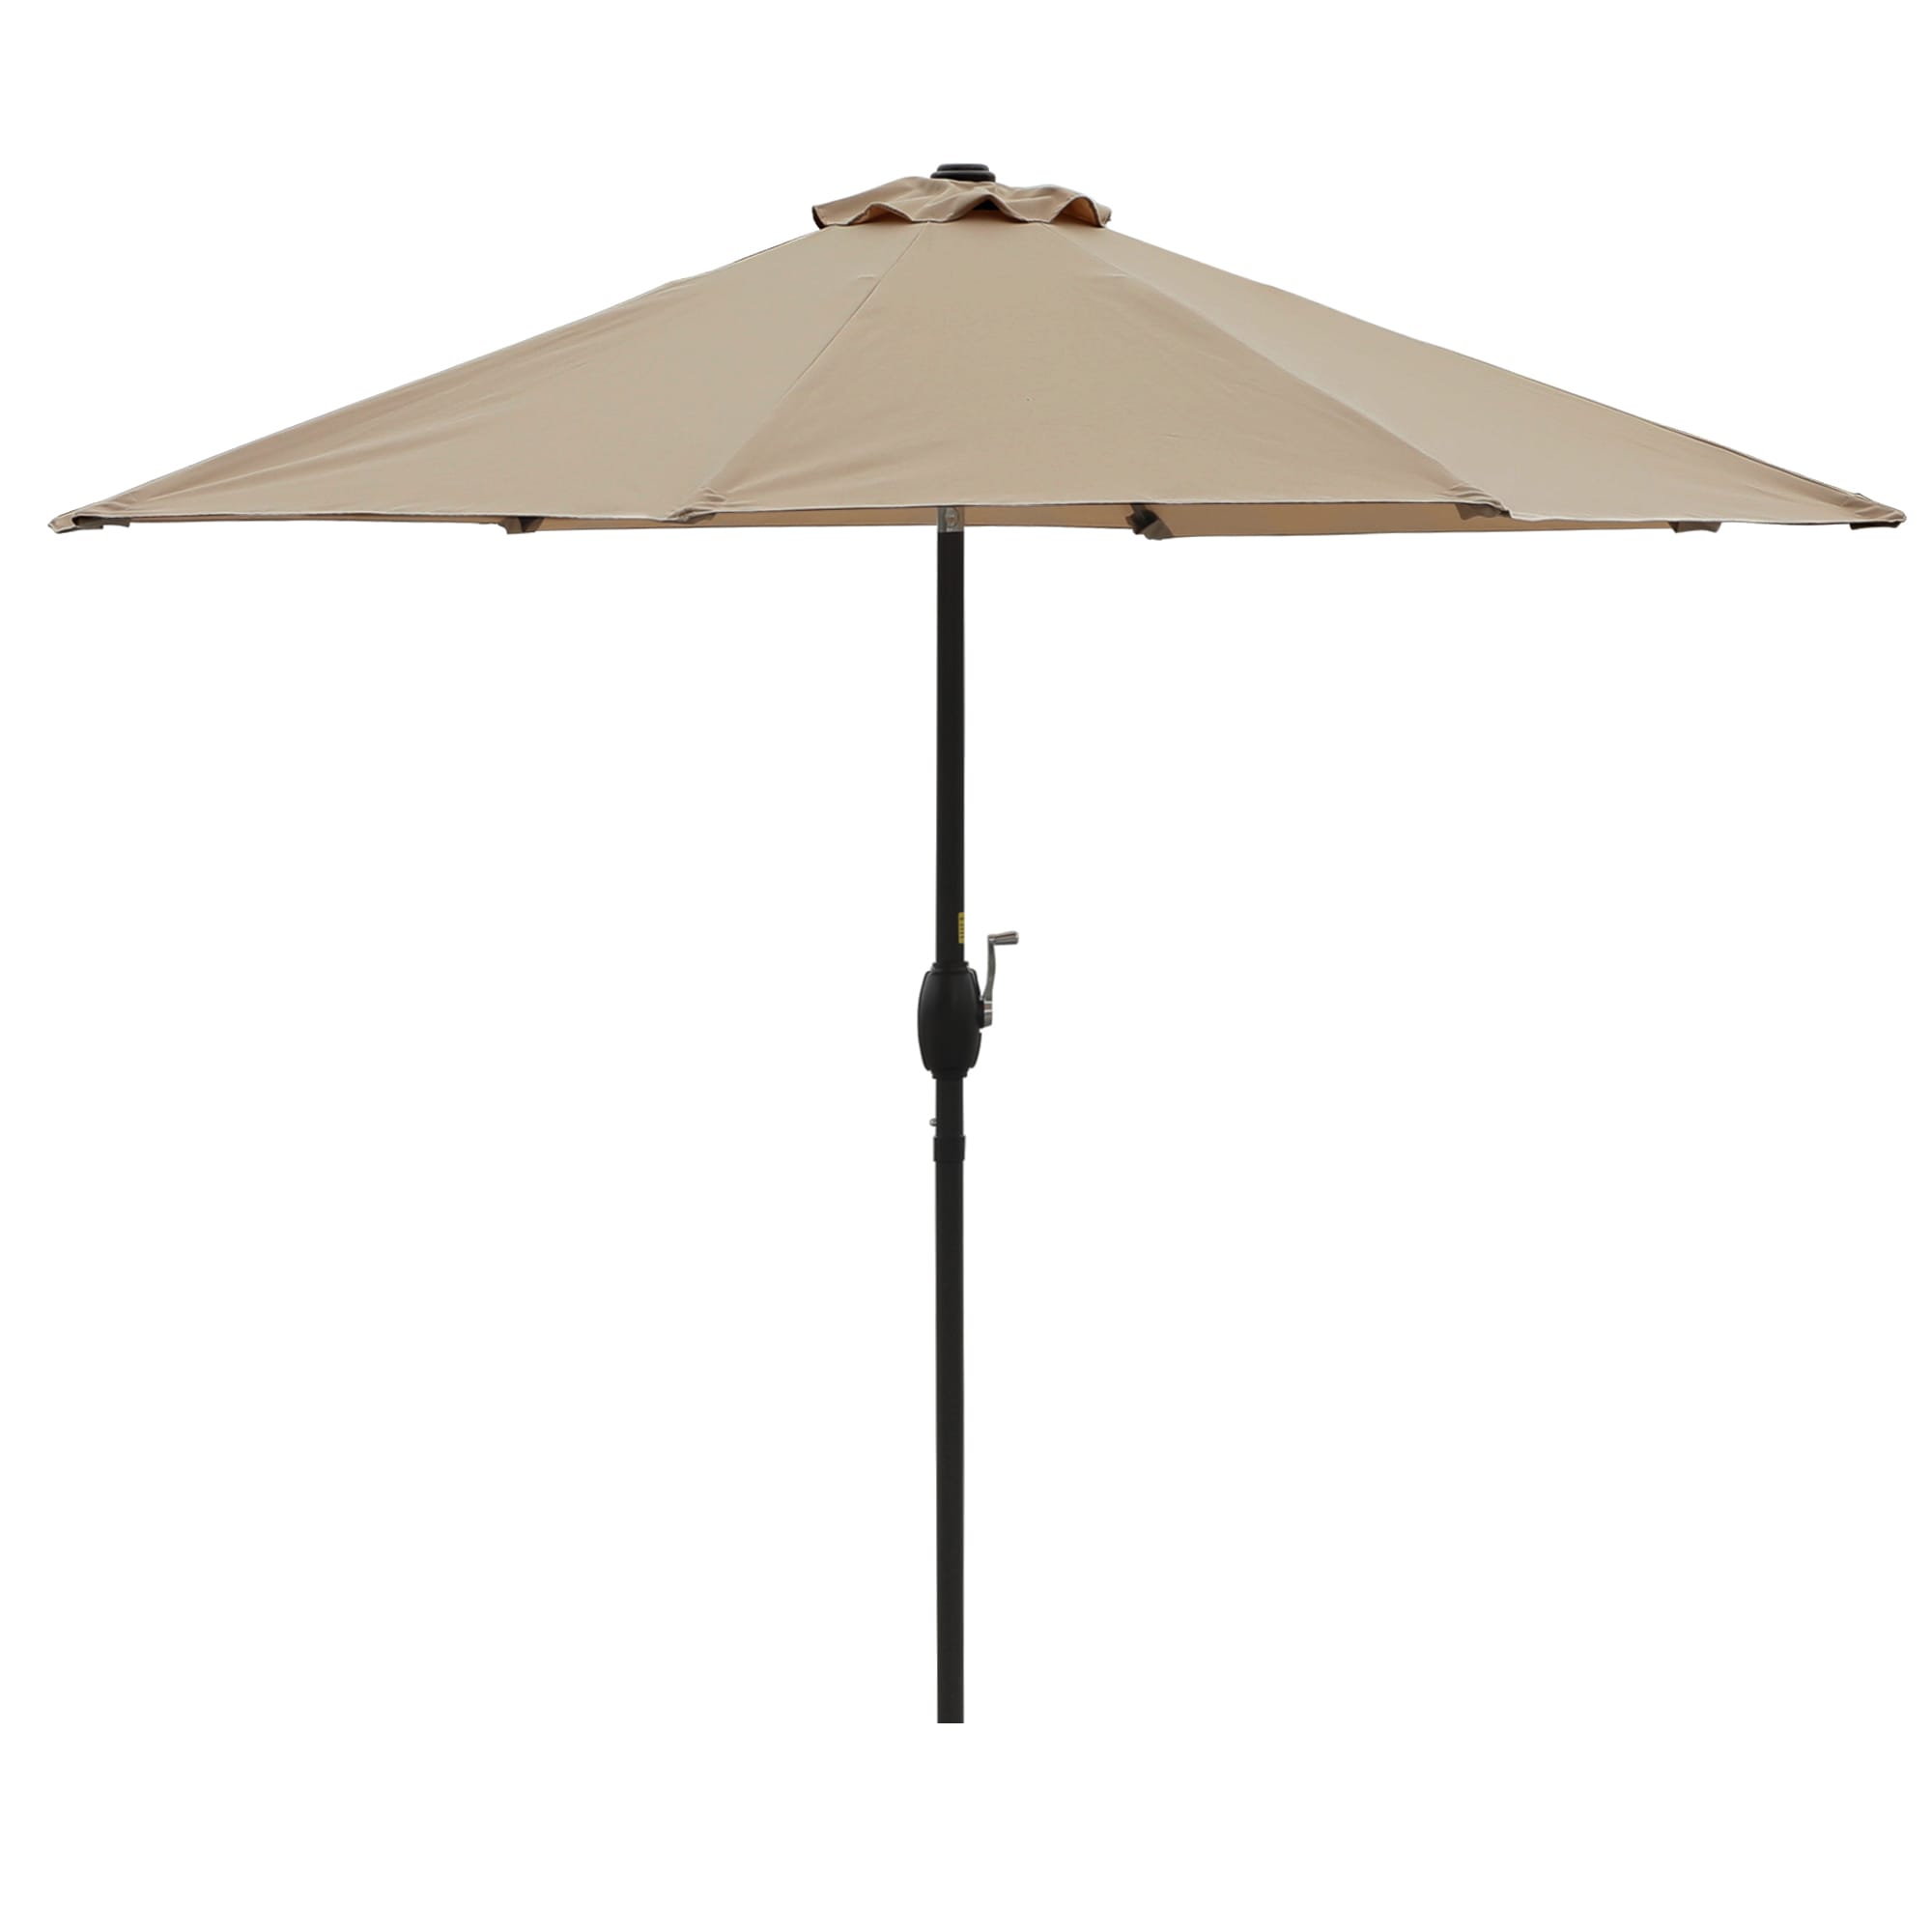 CASAINC 9 Ft Patio Umbrella With Tilt Adjustment and Crank